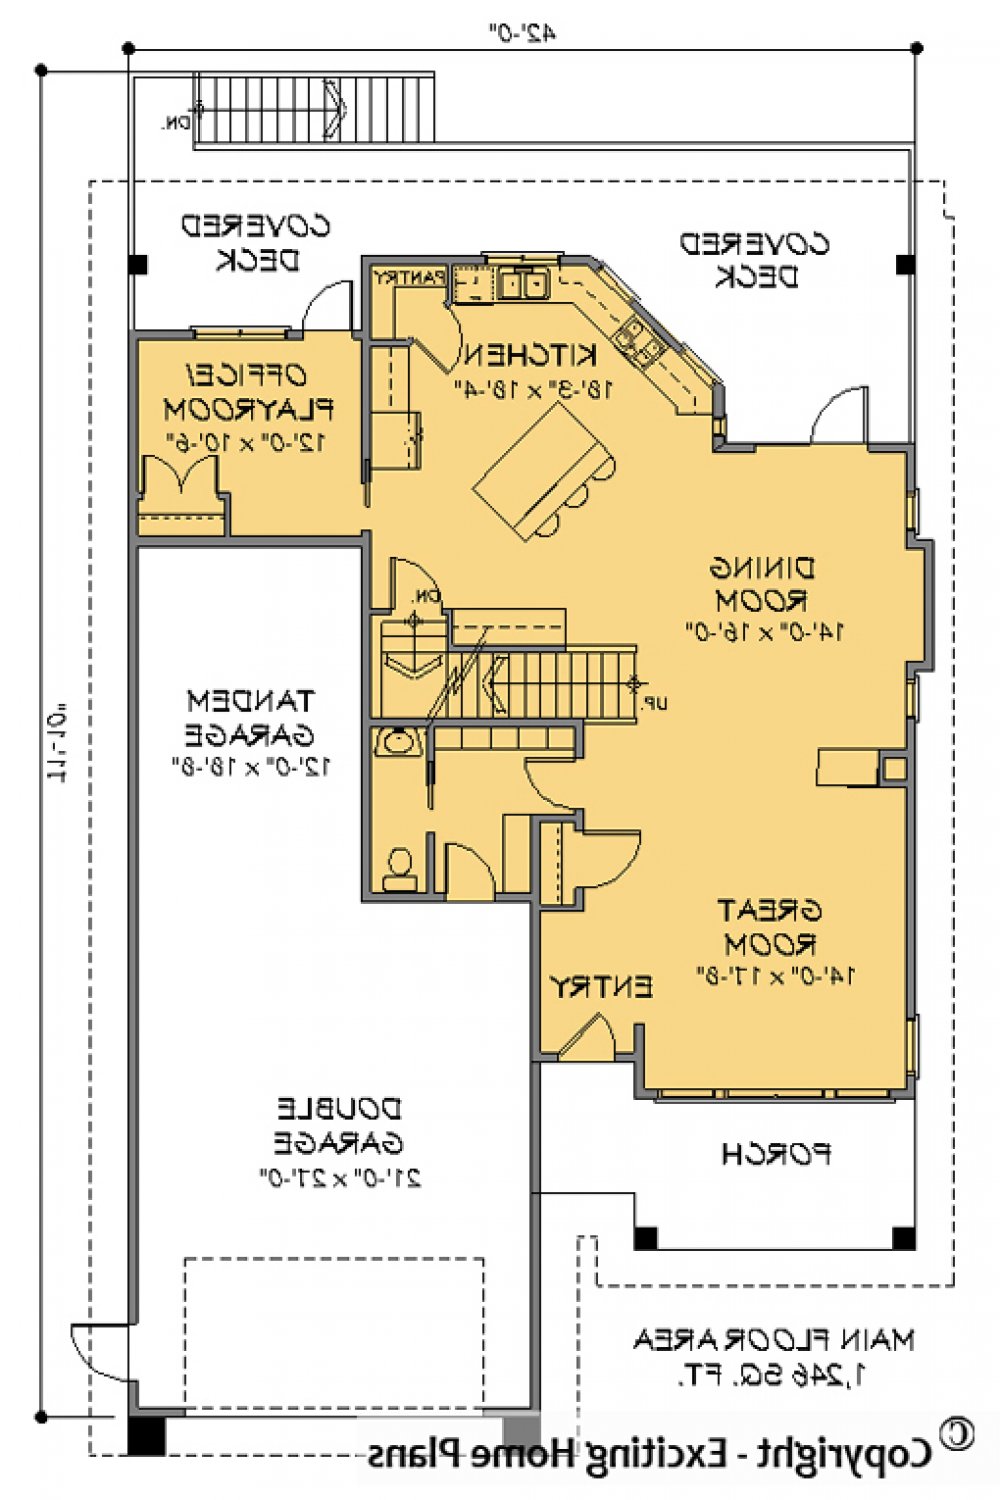 House Plan E1151-10  Main Floor Plan